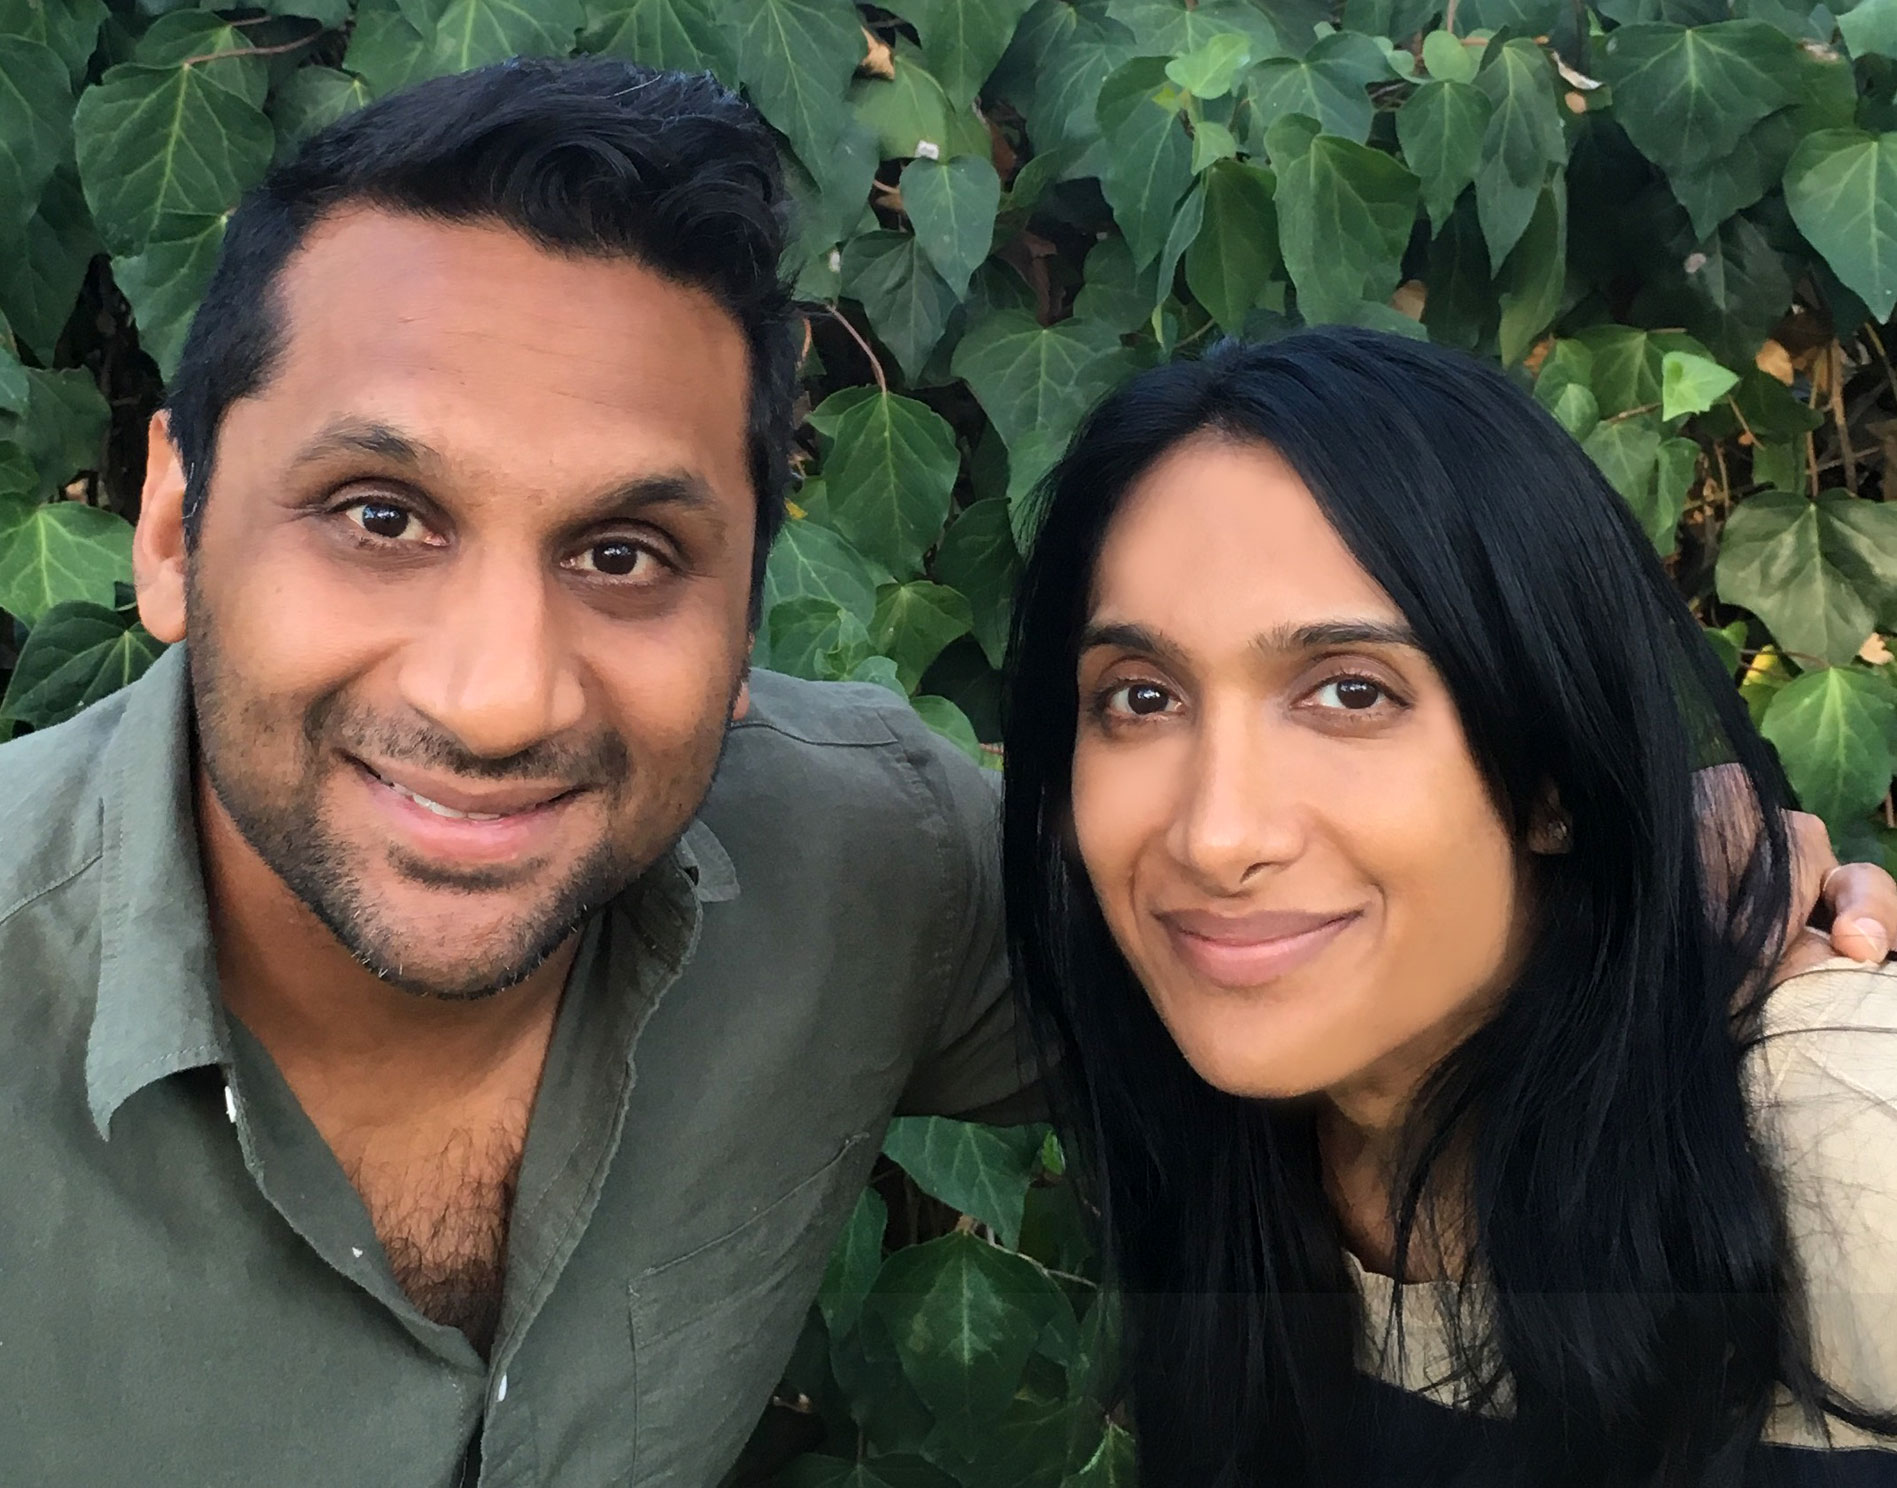 Filmmaker siblings Ravi and Geeta Patel of Meet the Patels